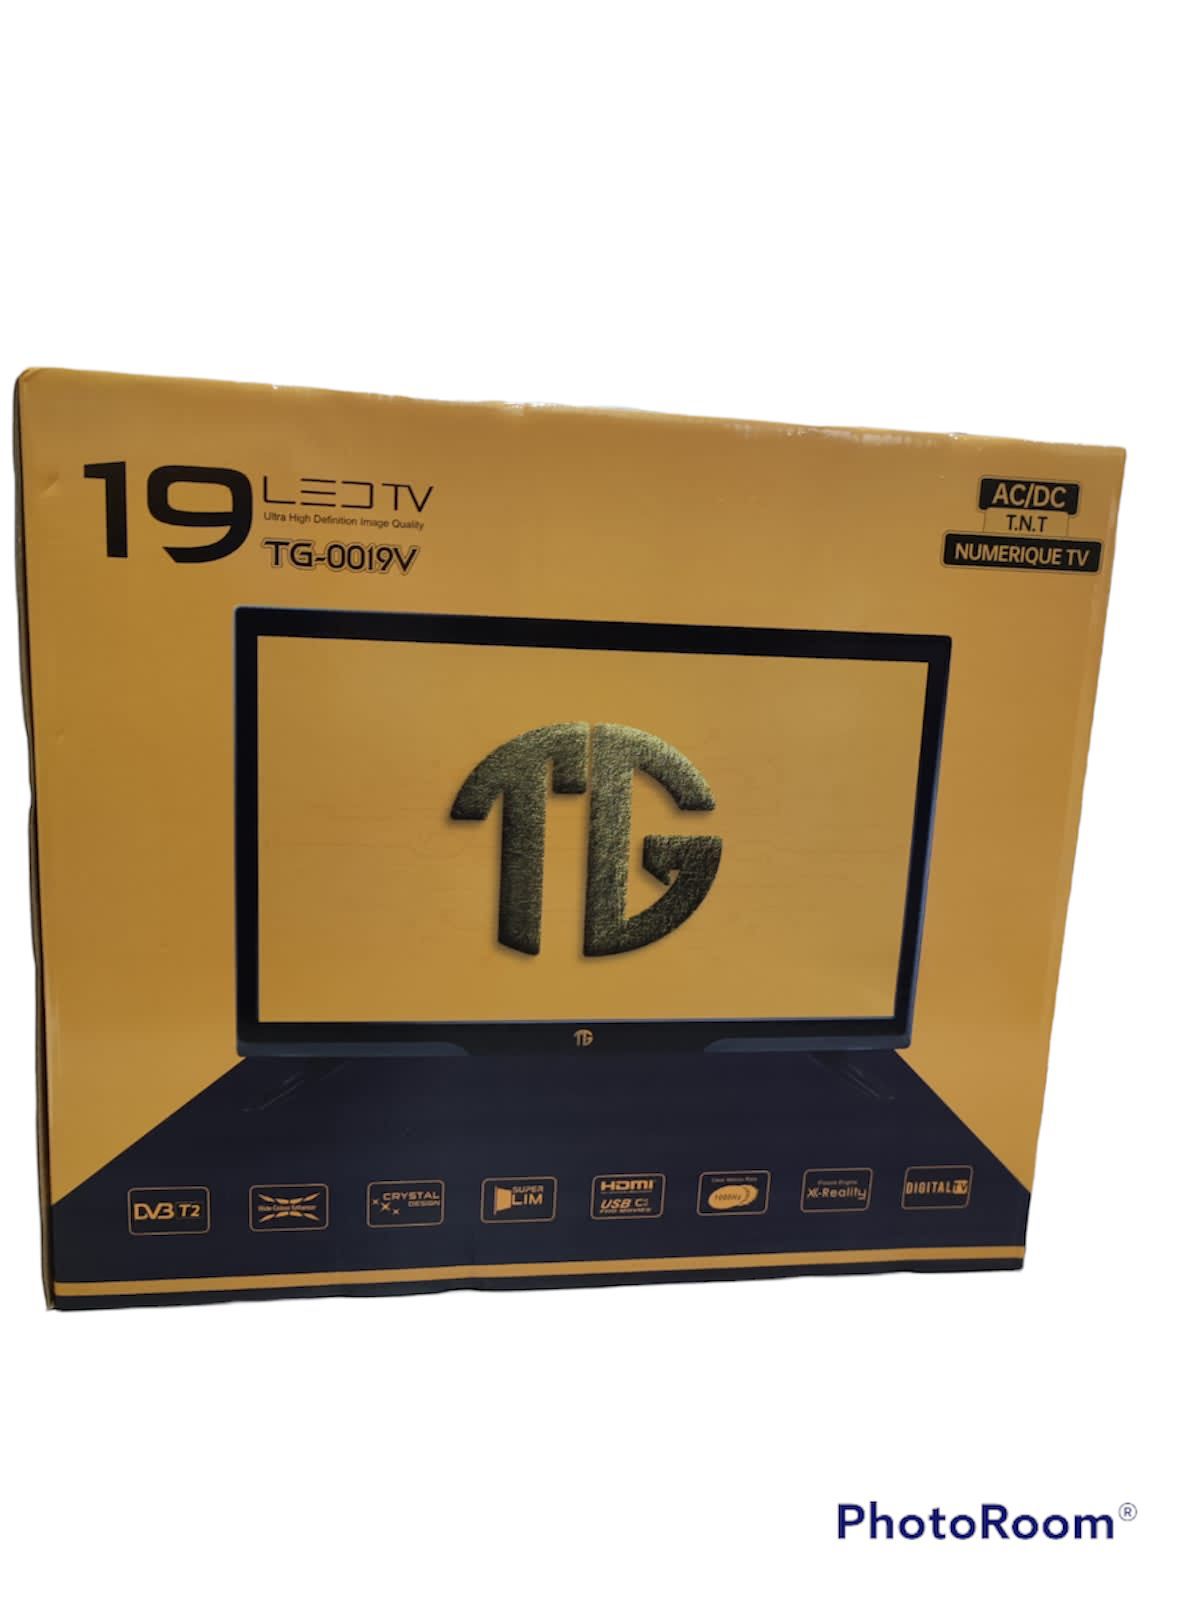 Televisor led tigers pro 19 pulgadas con sintonizador + tv box 1gb